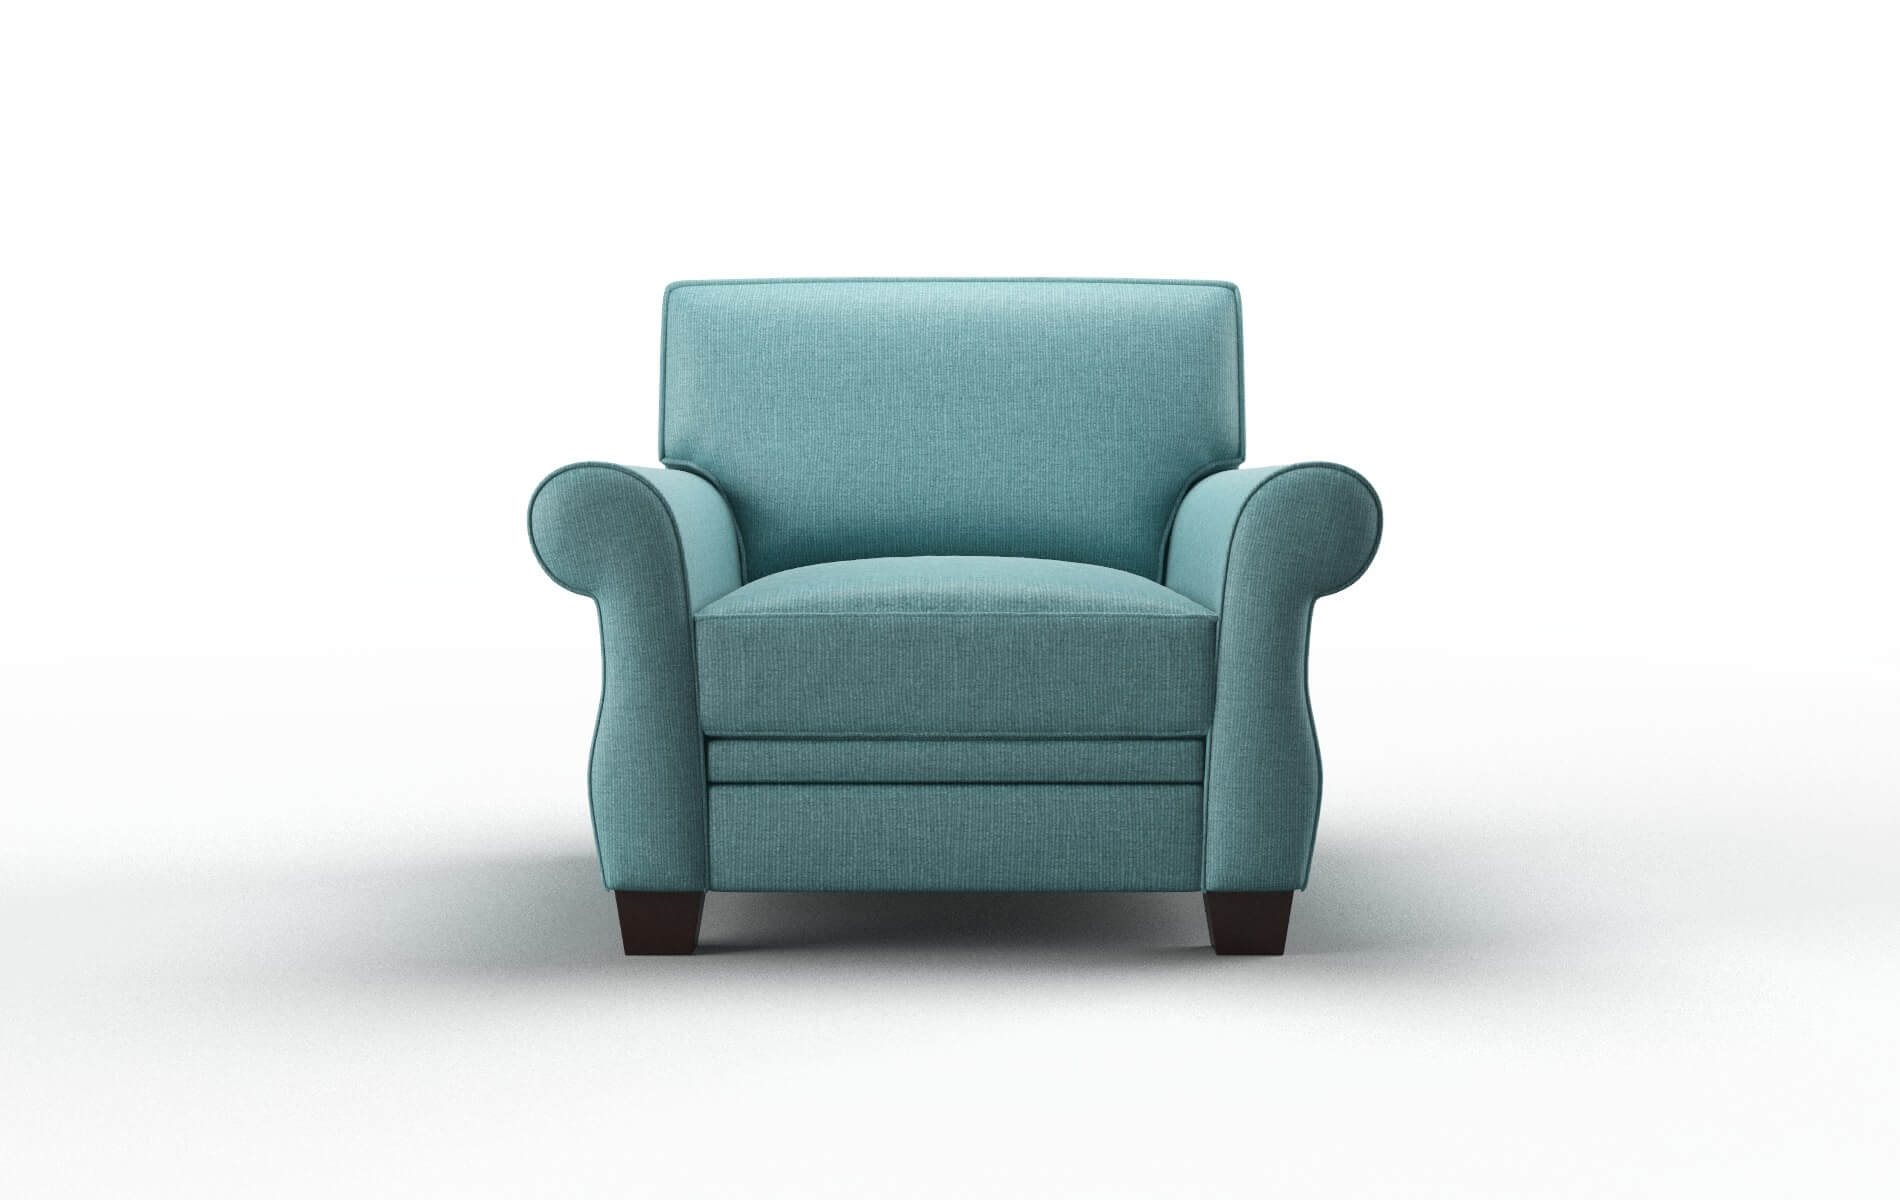 Rome Parker Turquoise chair espresso legs